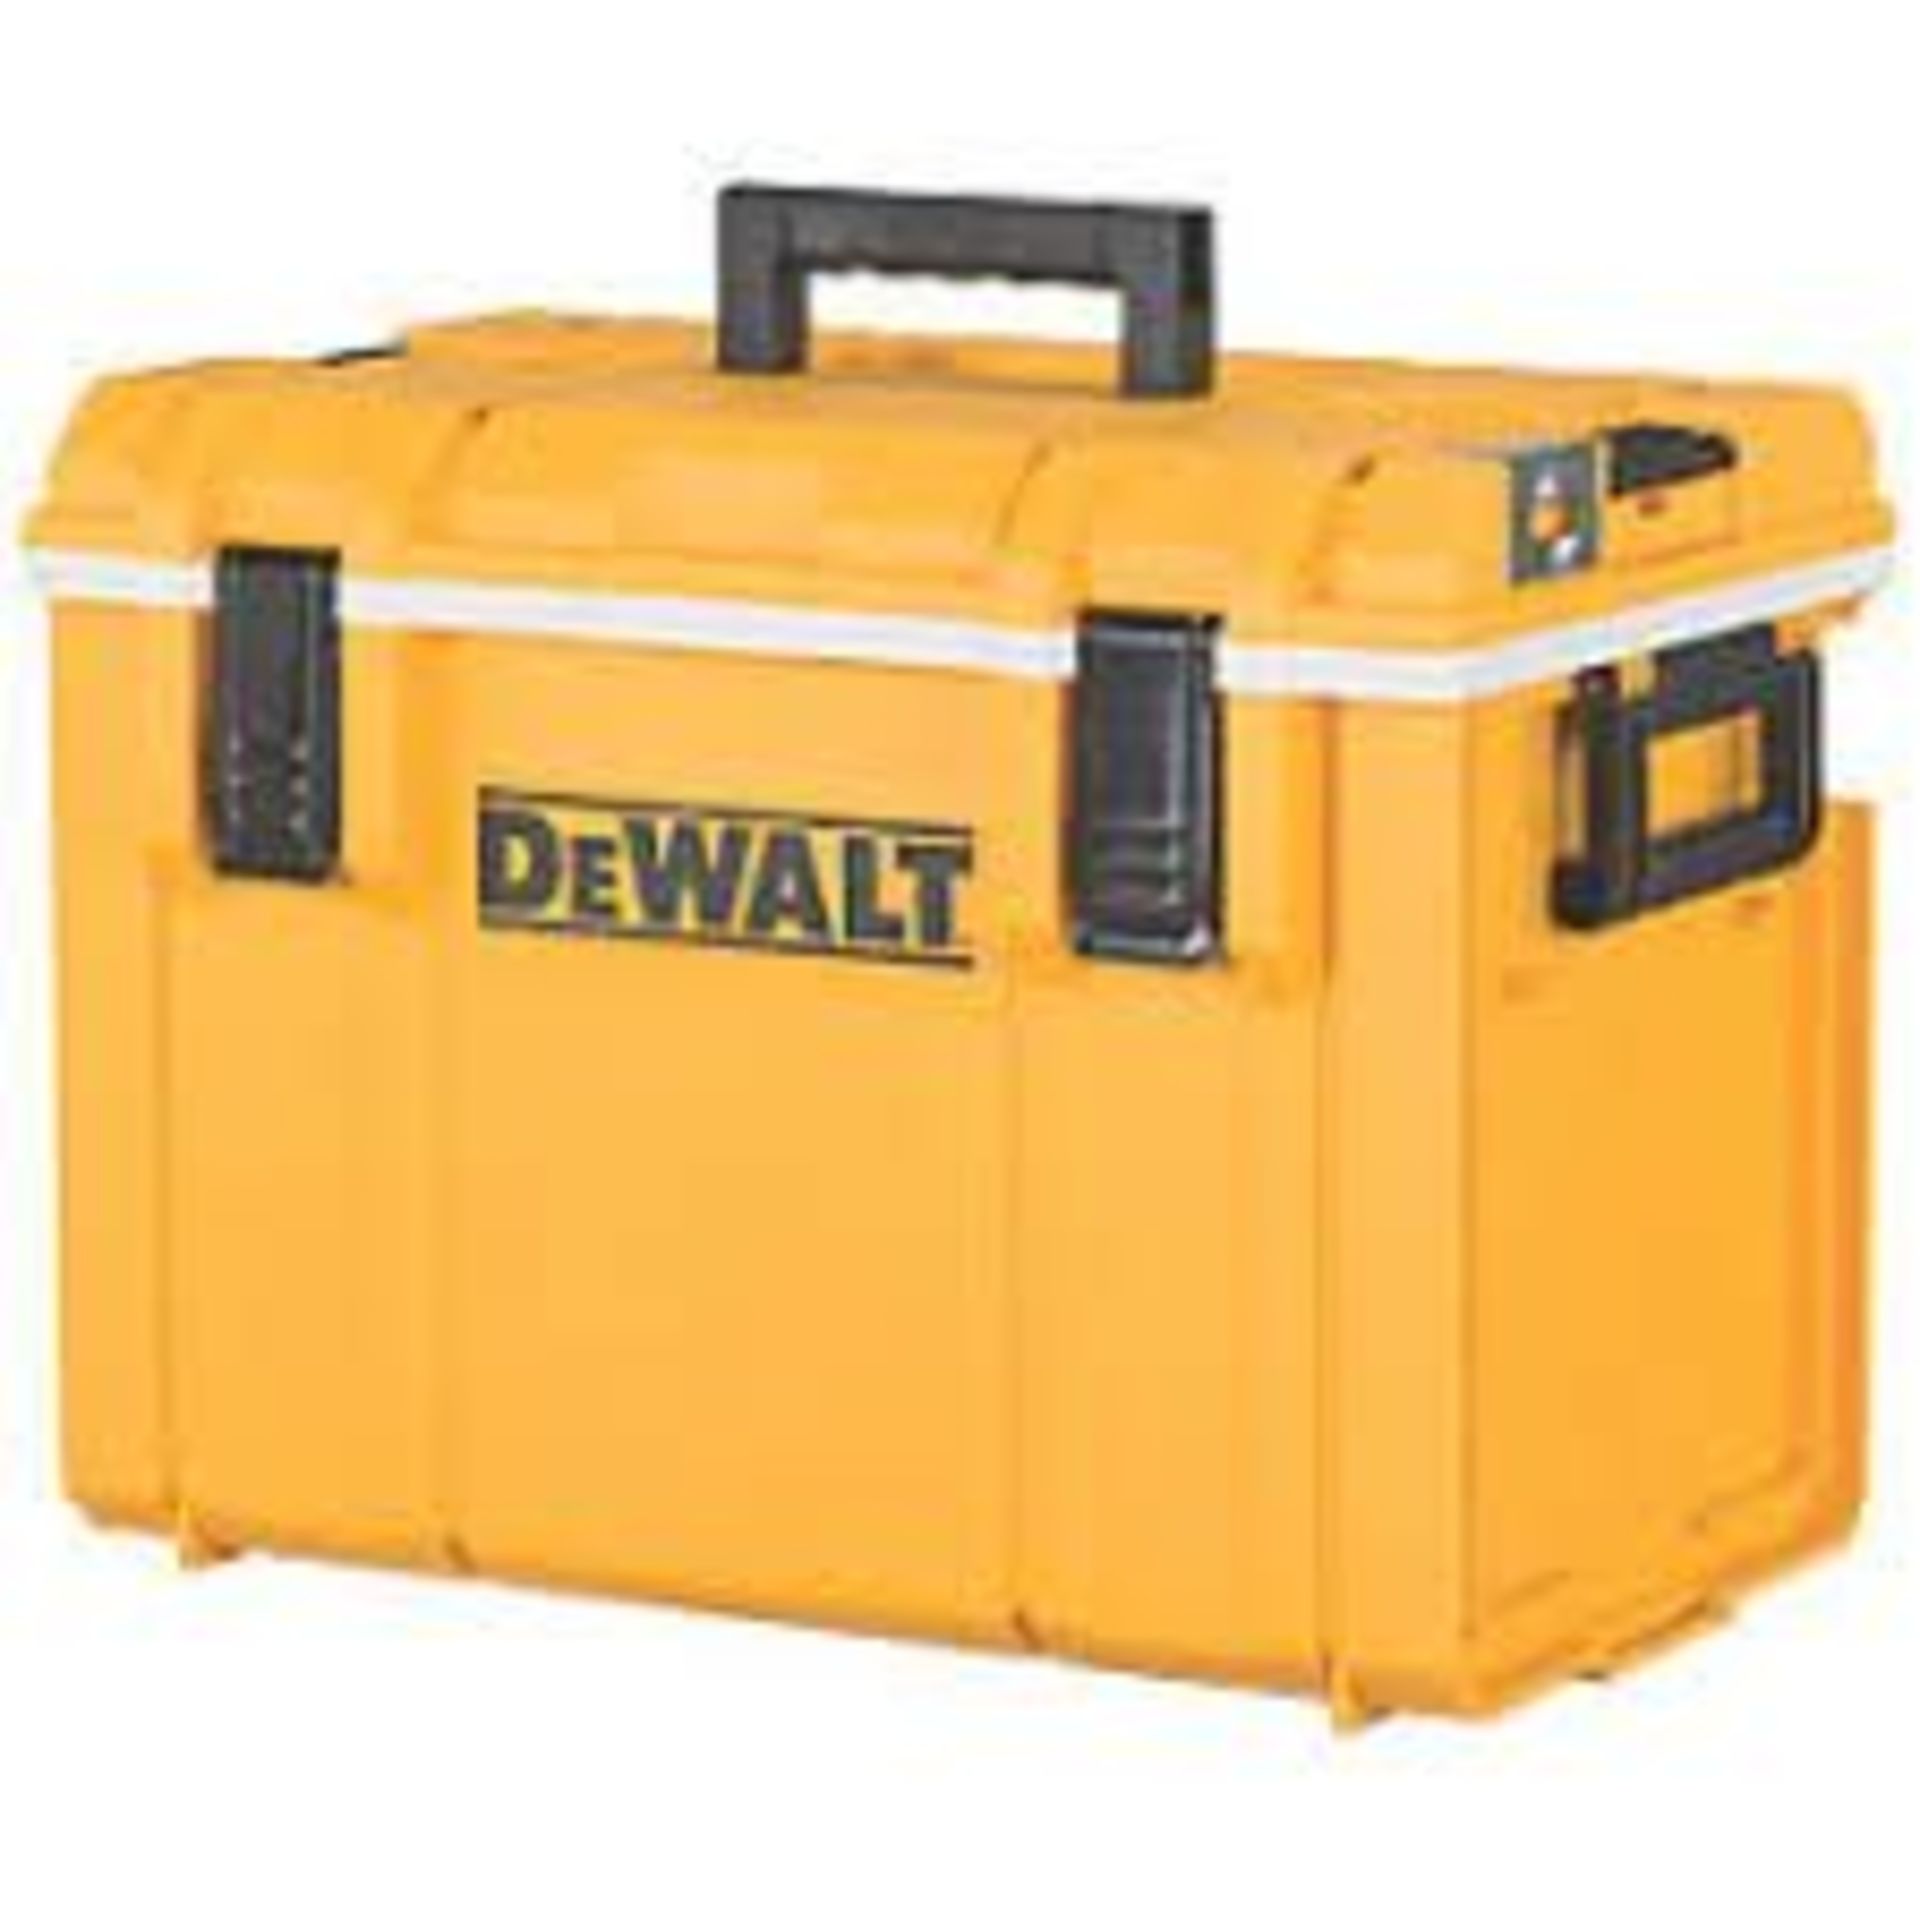 DeWalt ToughSystem 25.5Ltr Cooler - PW. Cooler with extensive storage space of 25.5 litres, 5 days